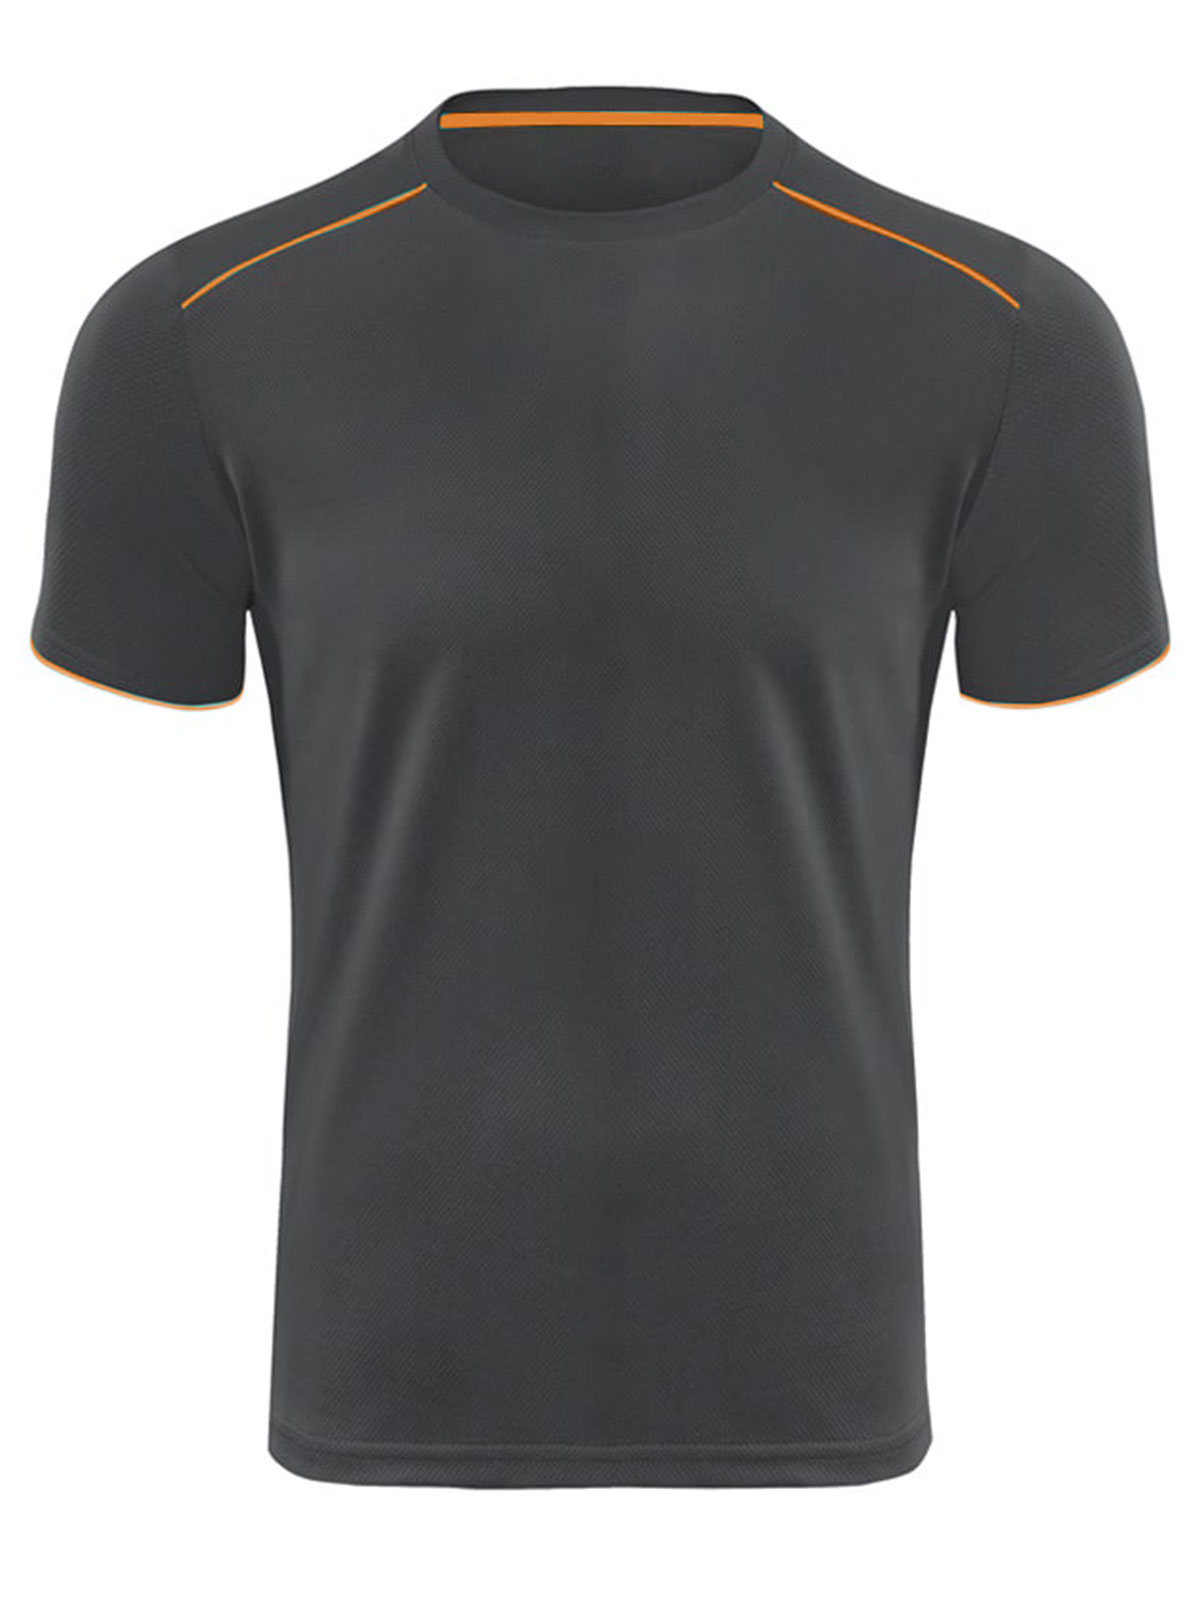 bicolor-performance-t-shirt-anthracite-orange.webp